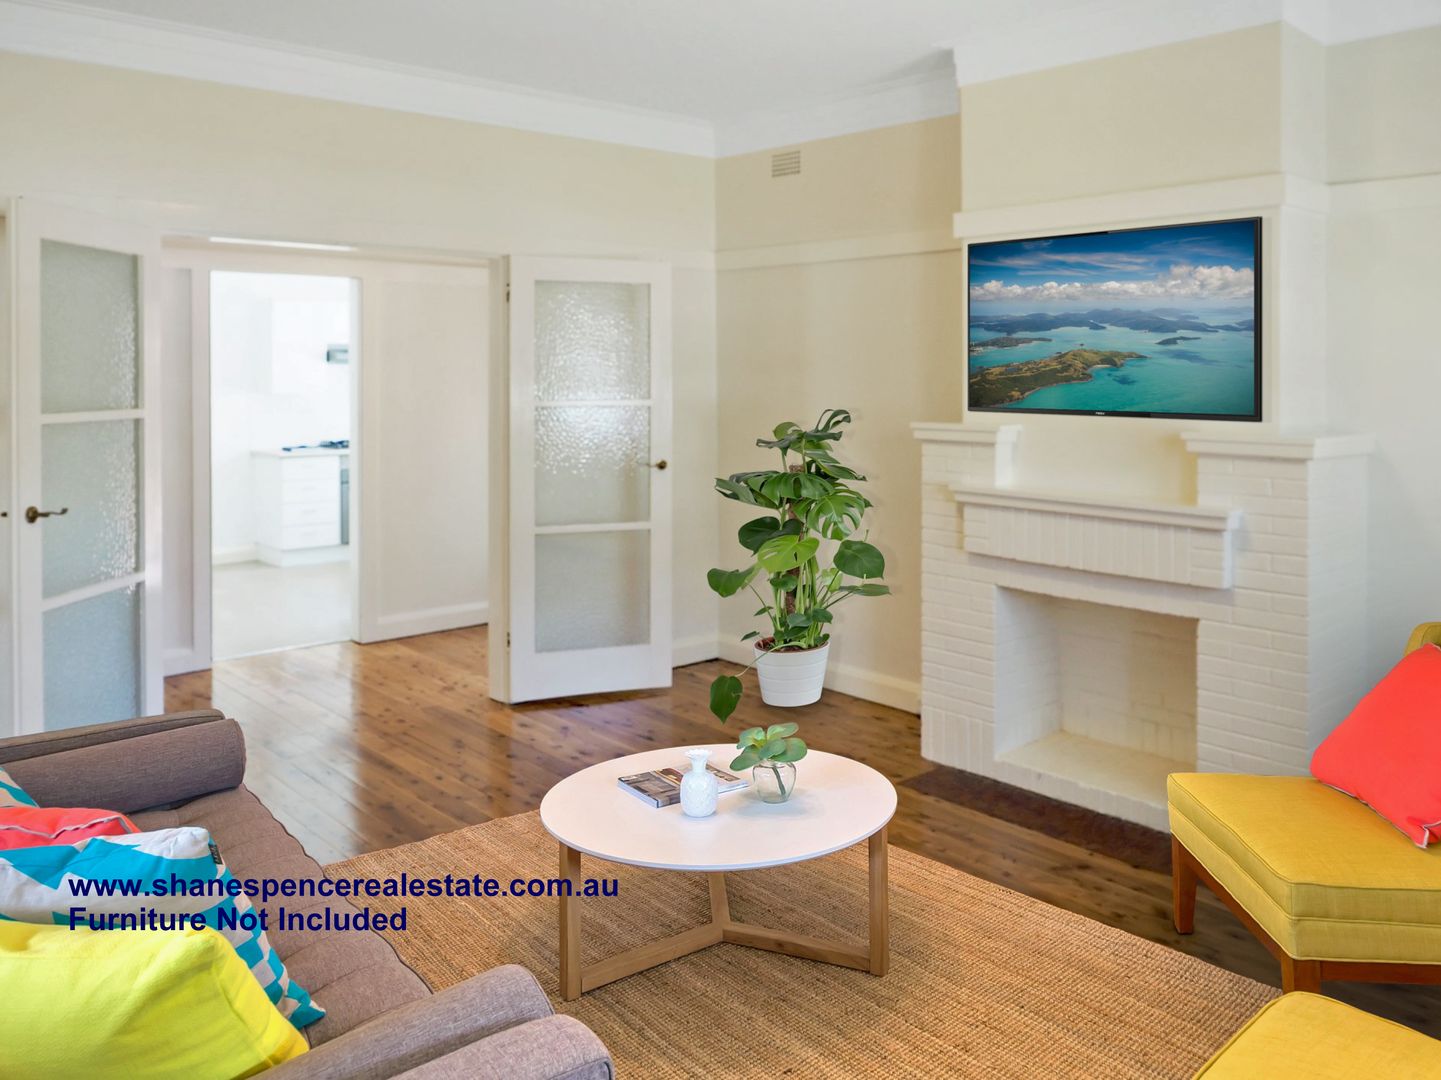 2 bedrooms Apartment / Unit / Flat in 1/16 Lodge Street BALGOWLAH NSW, 2093